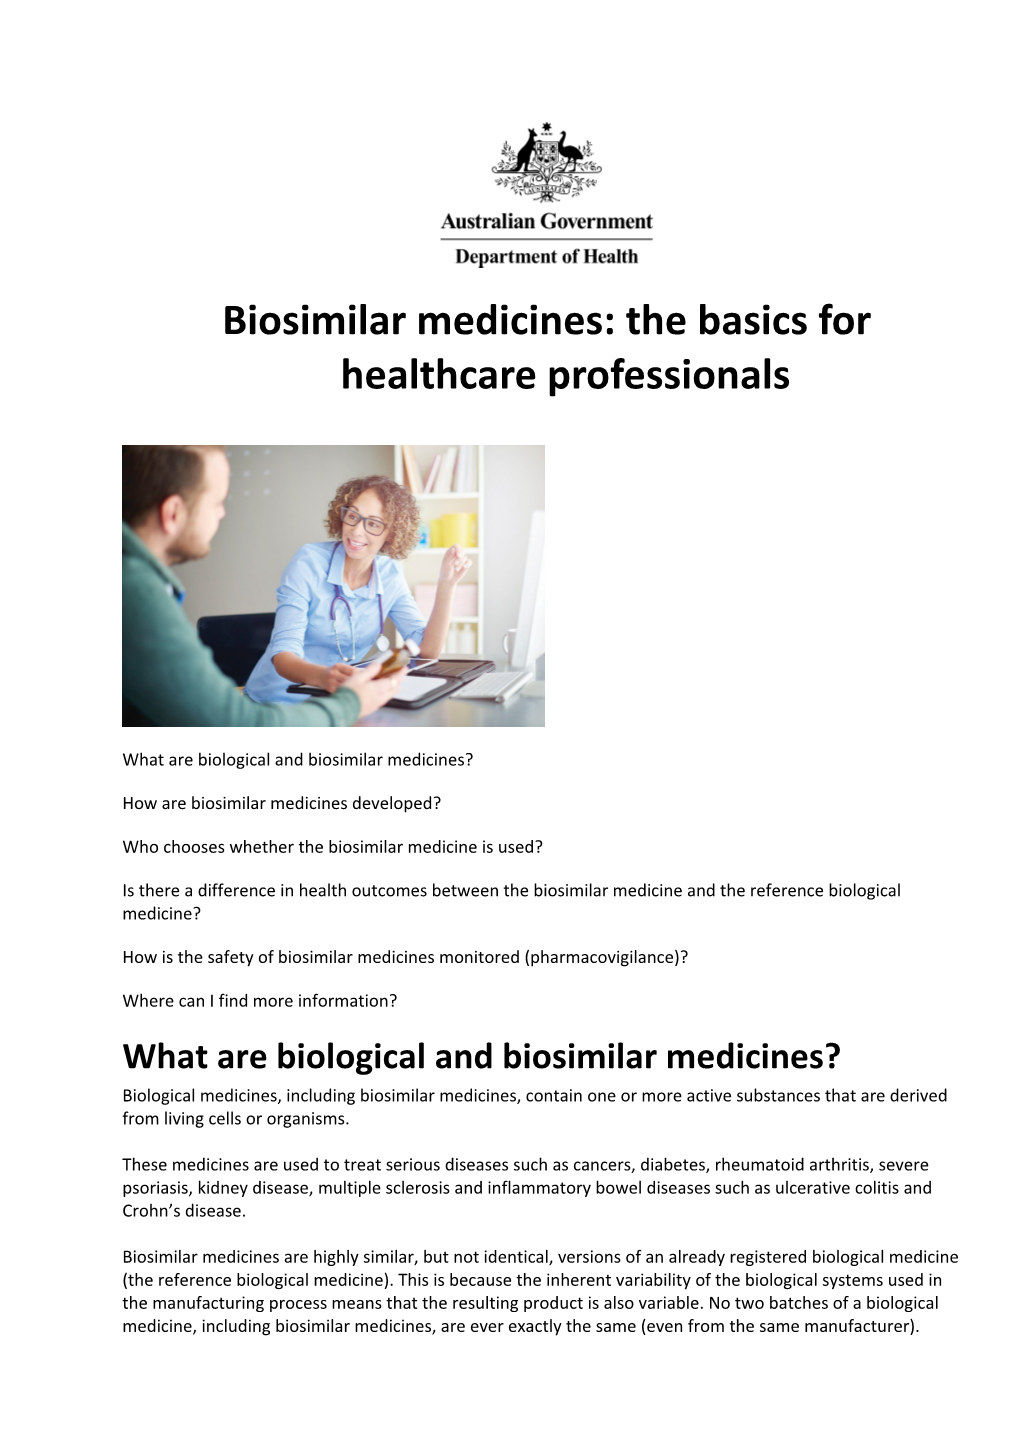 Biosimilar Medicines: the Basics for Healthcare Professionals